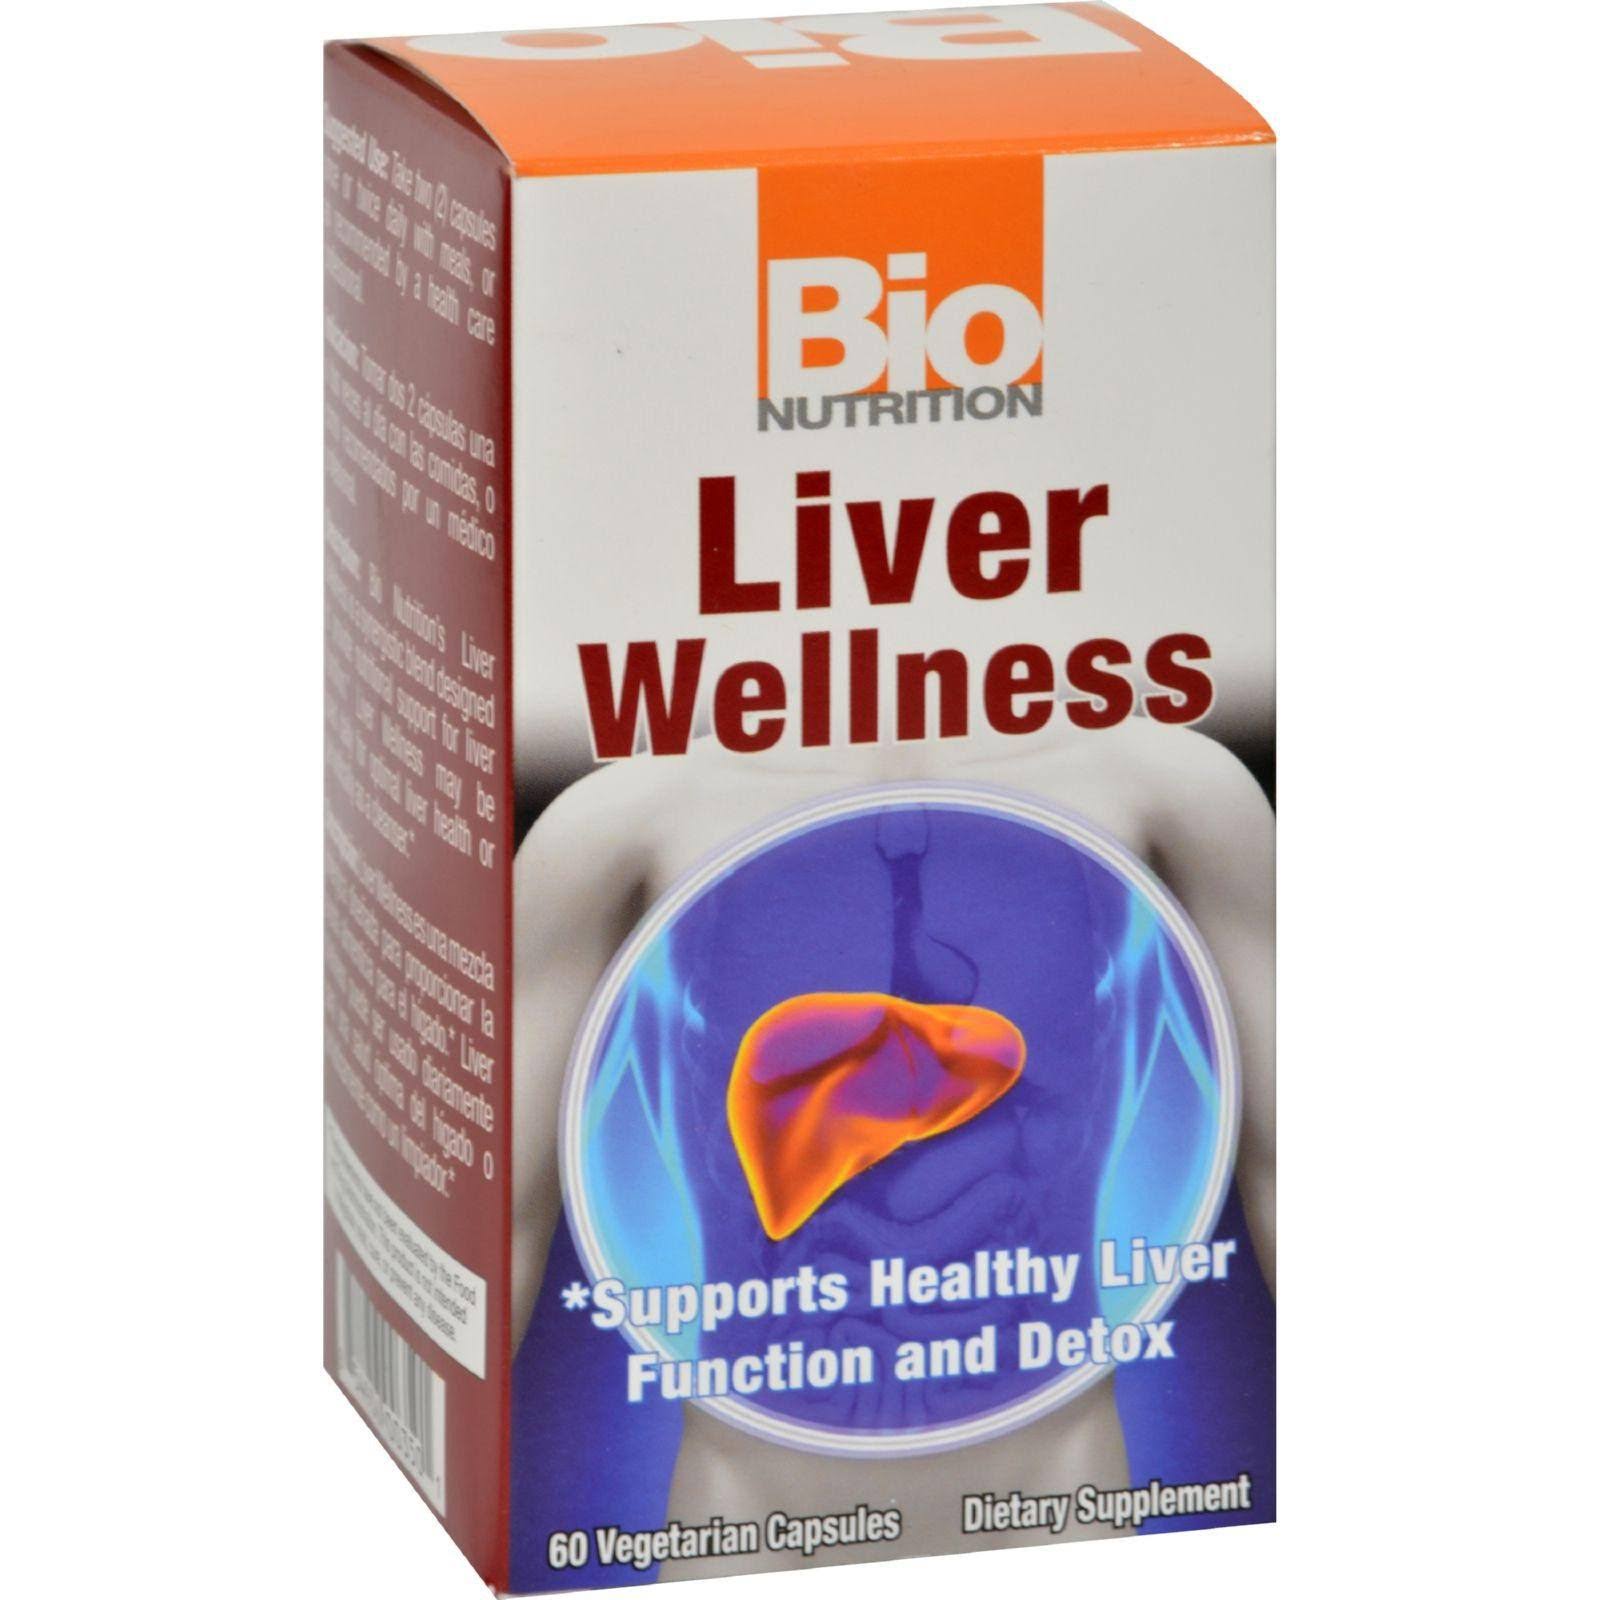 Bio Nutrition Liver Wellness Dietary Supplement - 60 Vegetarian Capsules